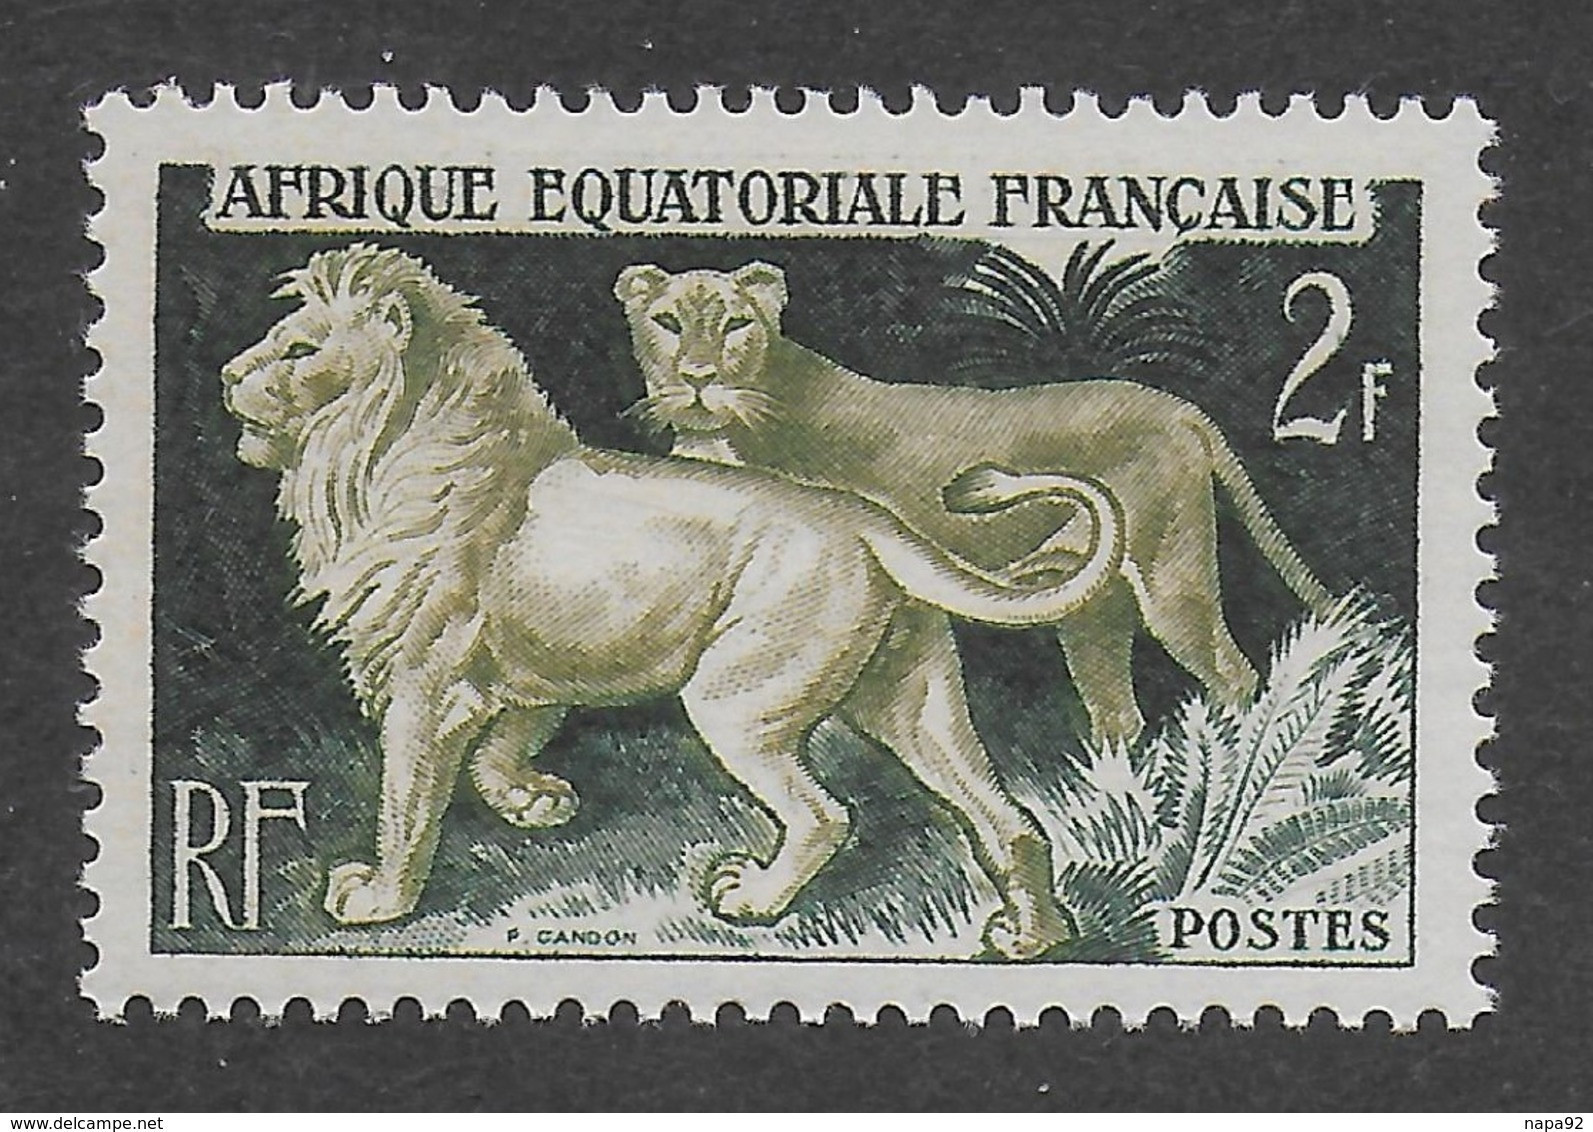 AFRIQUE EQUATORIALE FRANCAISE - AEF - A.E.F. - 1957 - YT 239** - MNH - Ongebruikt